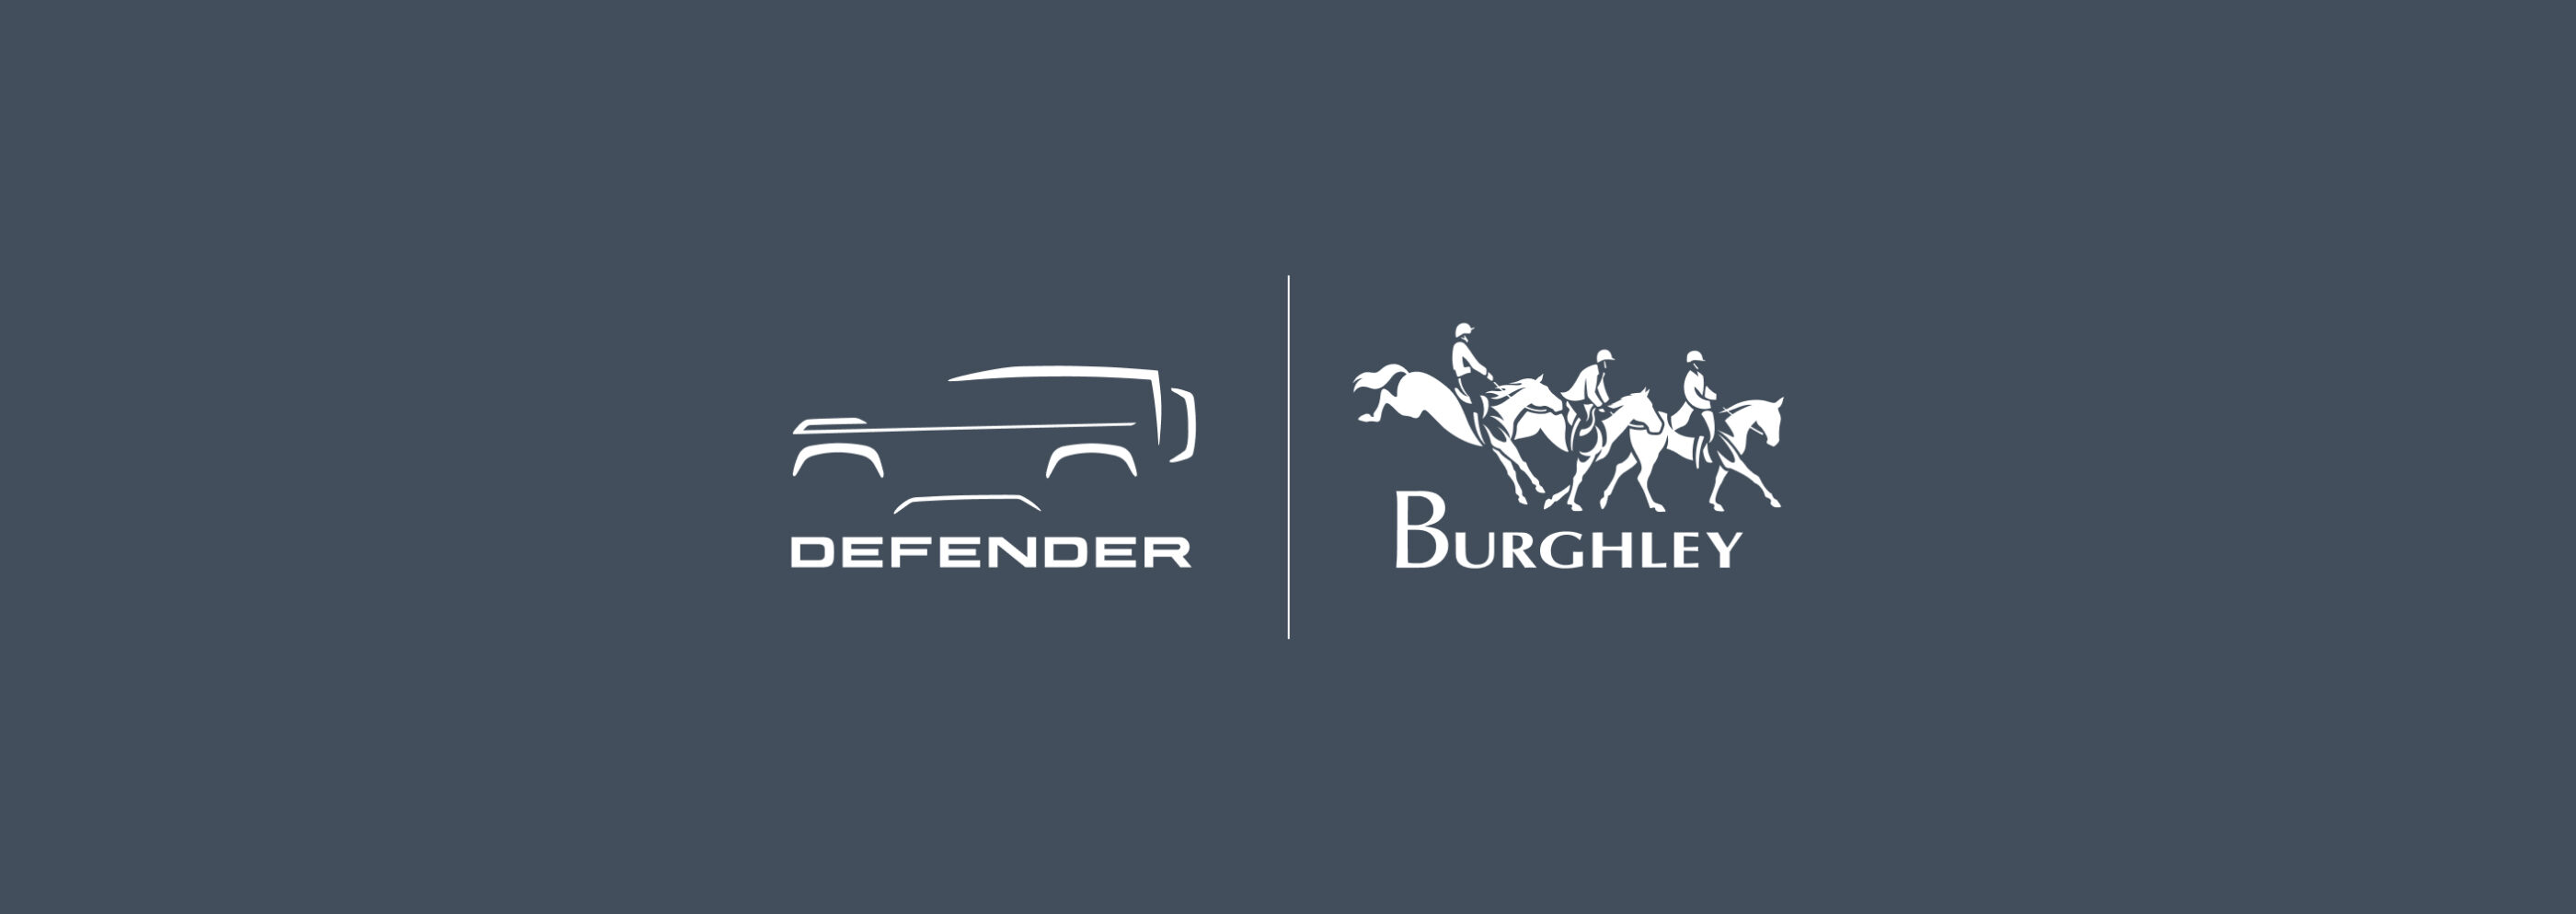 Defender and Burghley logos Hero Desktop